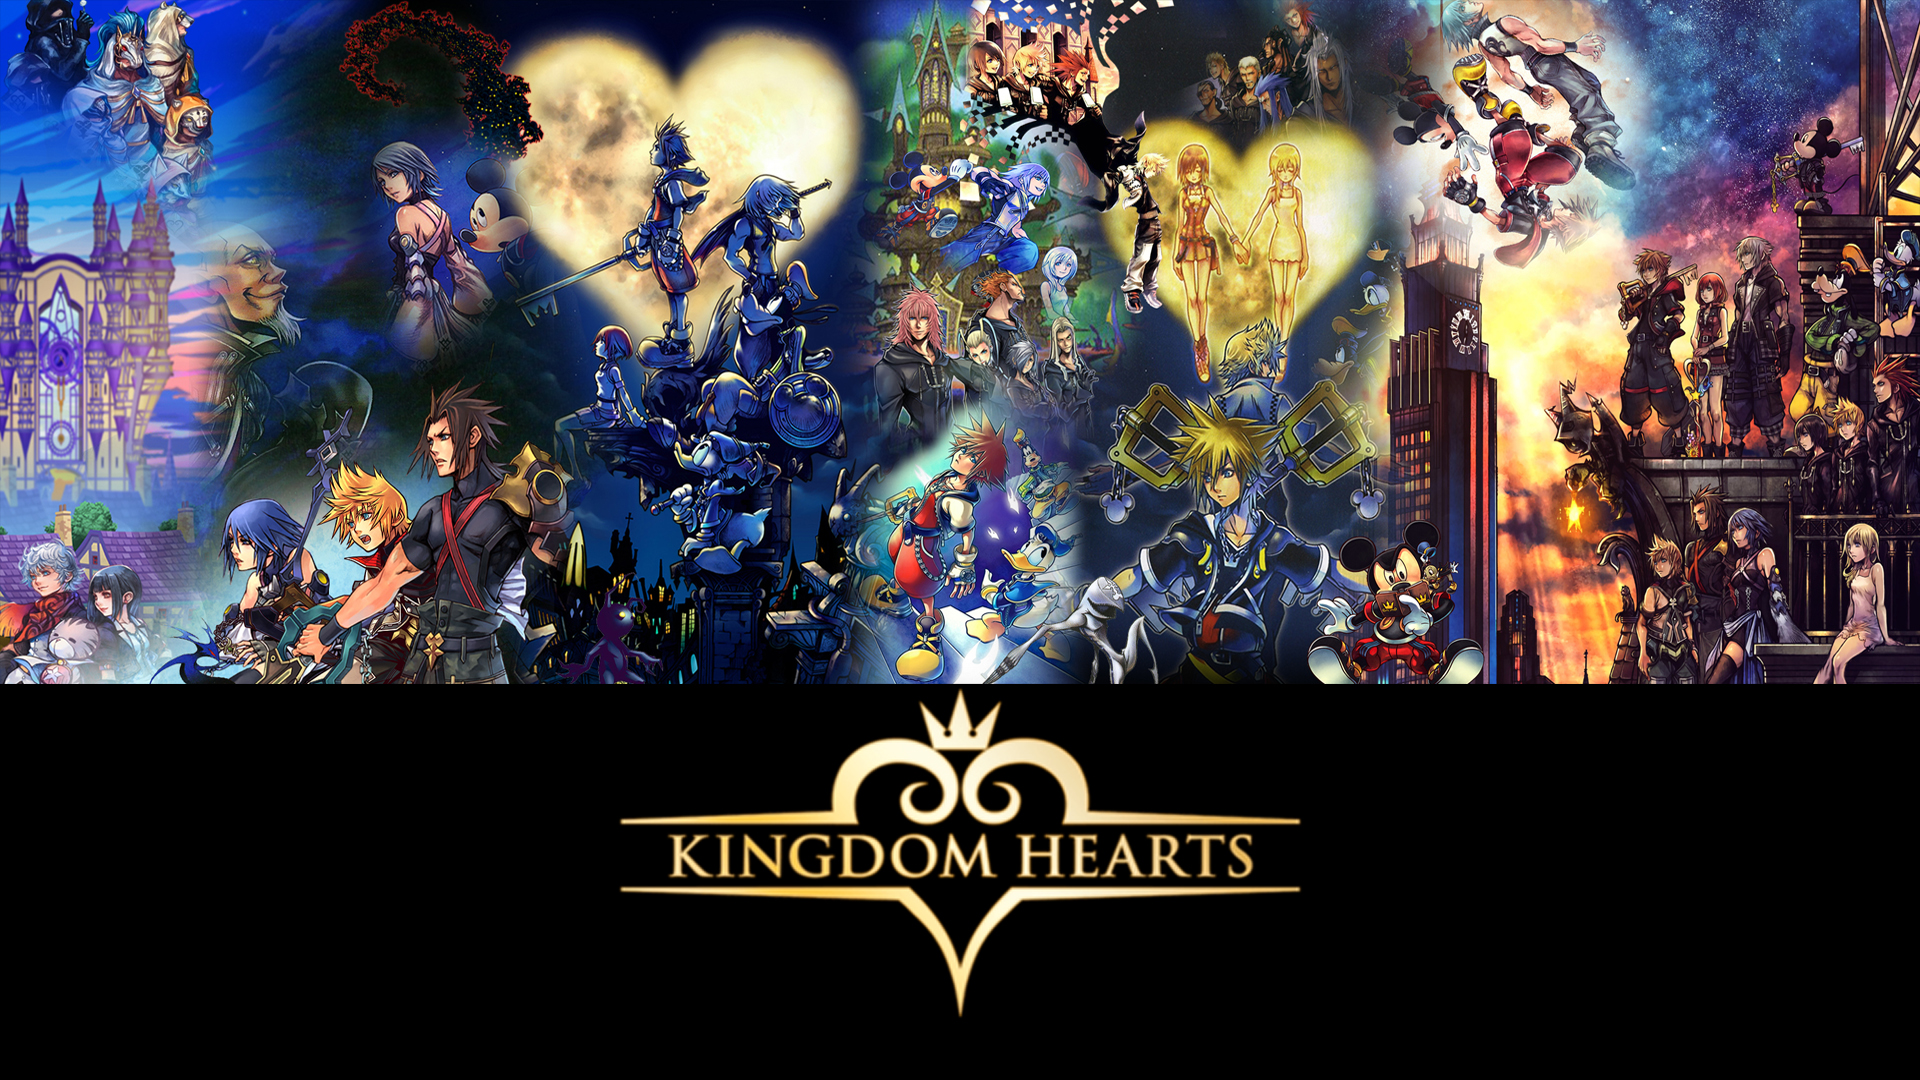 Kingdom Hearts Series Banner Wallpaper By Thekingblader995 On Deviantart